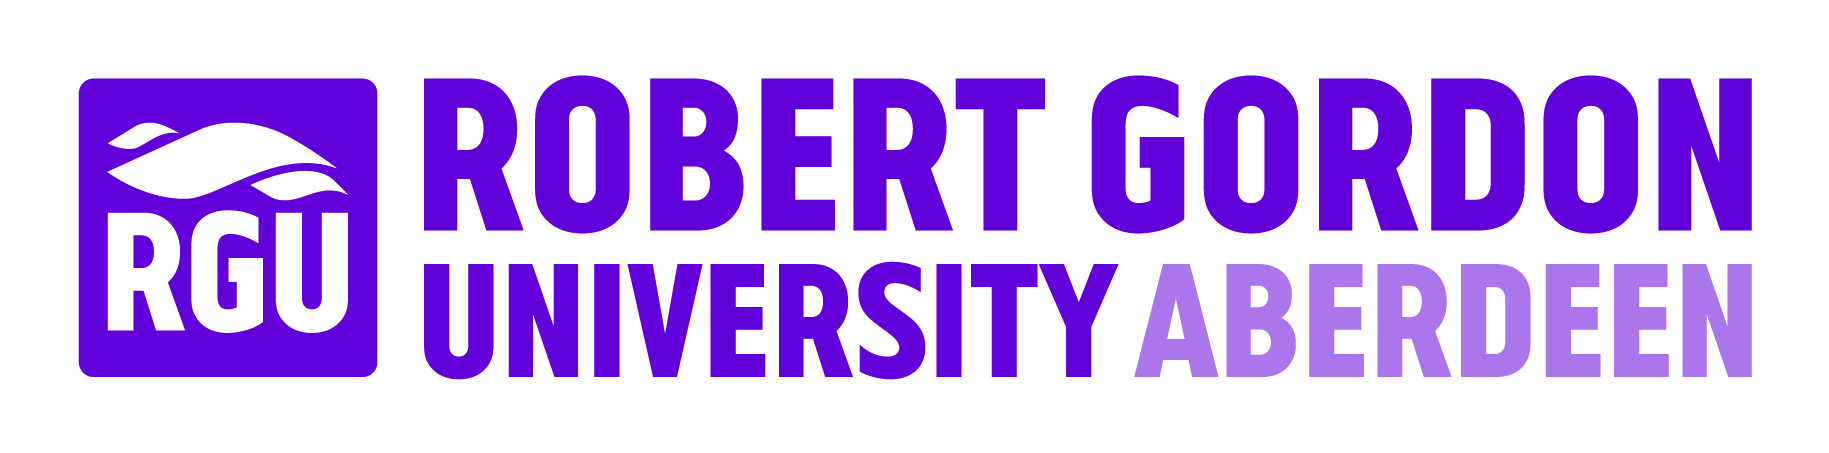 The Robert Godon University